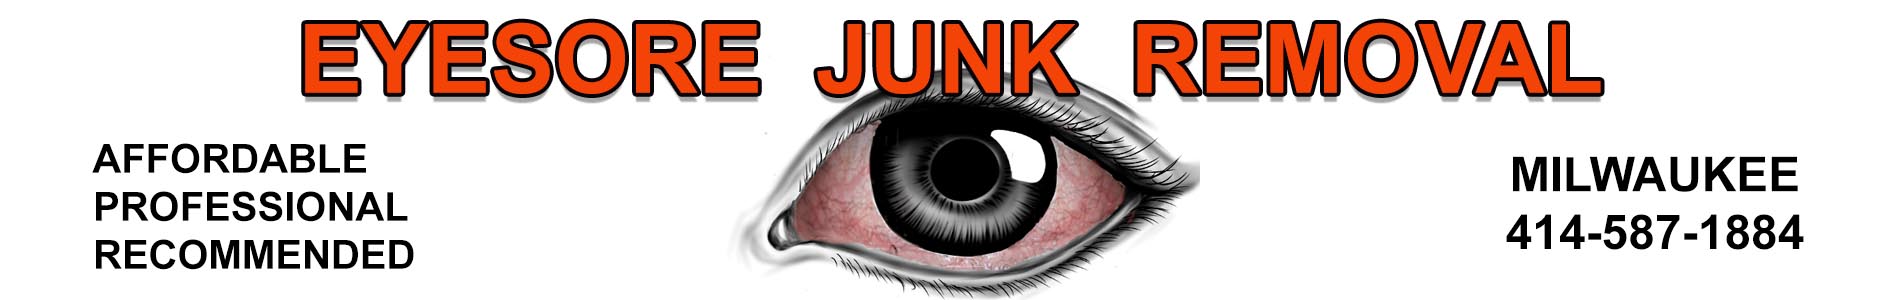 Eyesore Junk removal